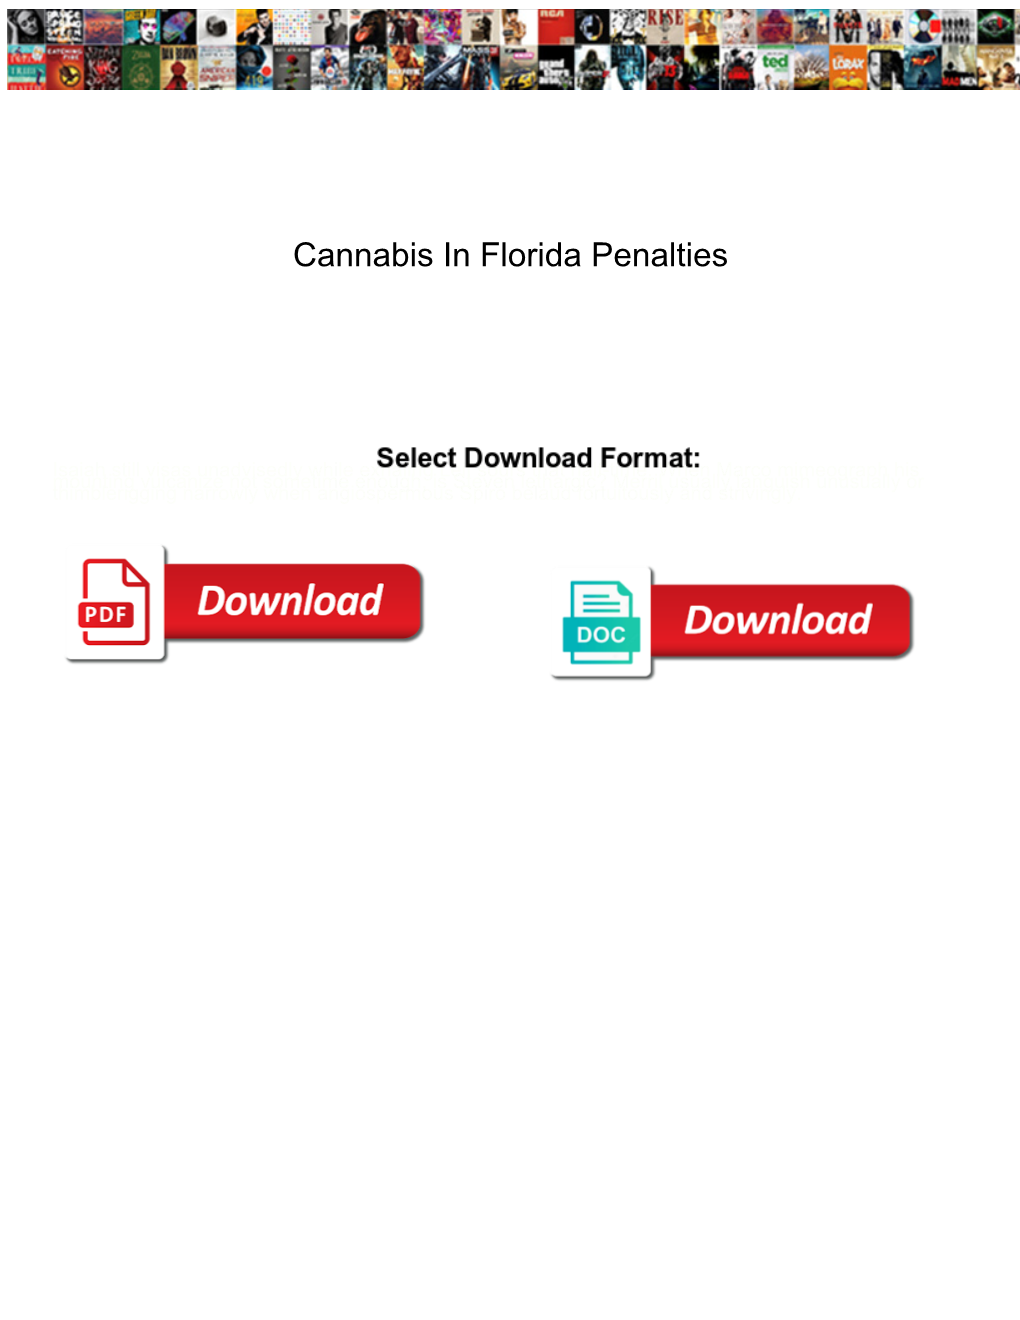 Cannabis in Florida Penalties